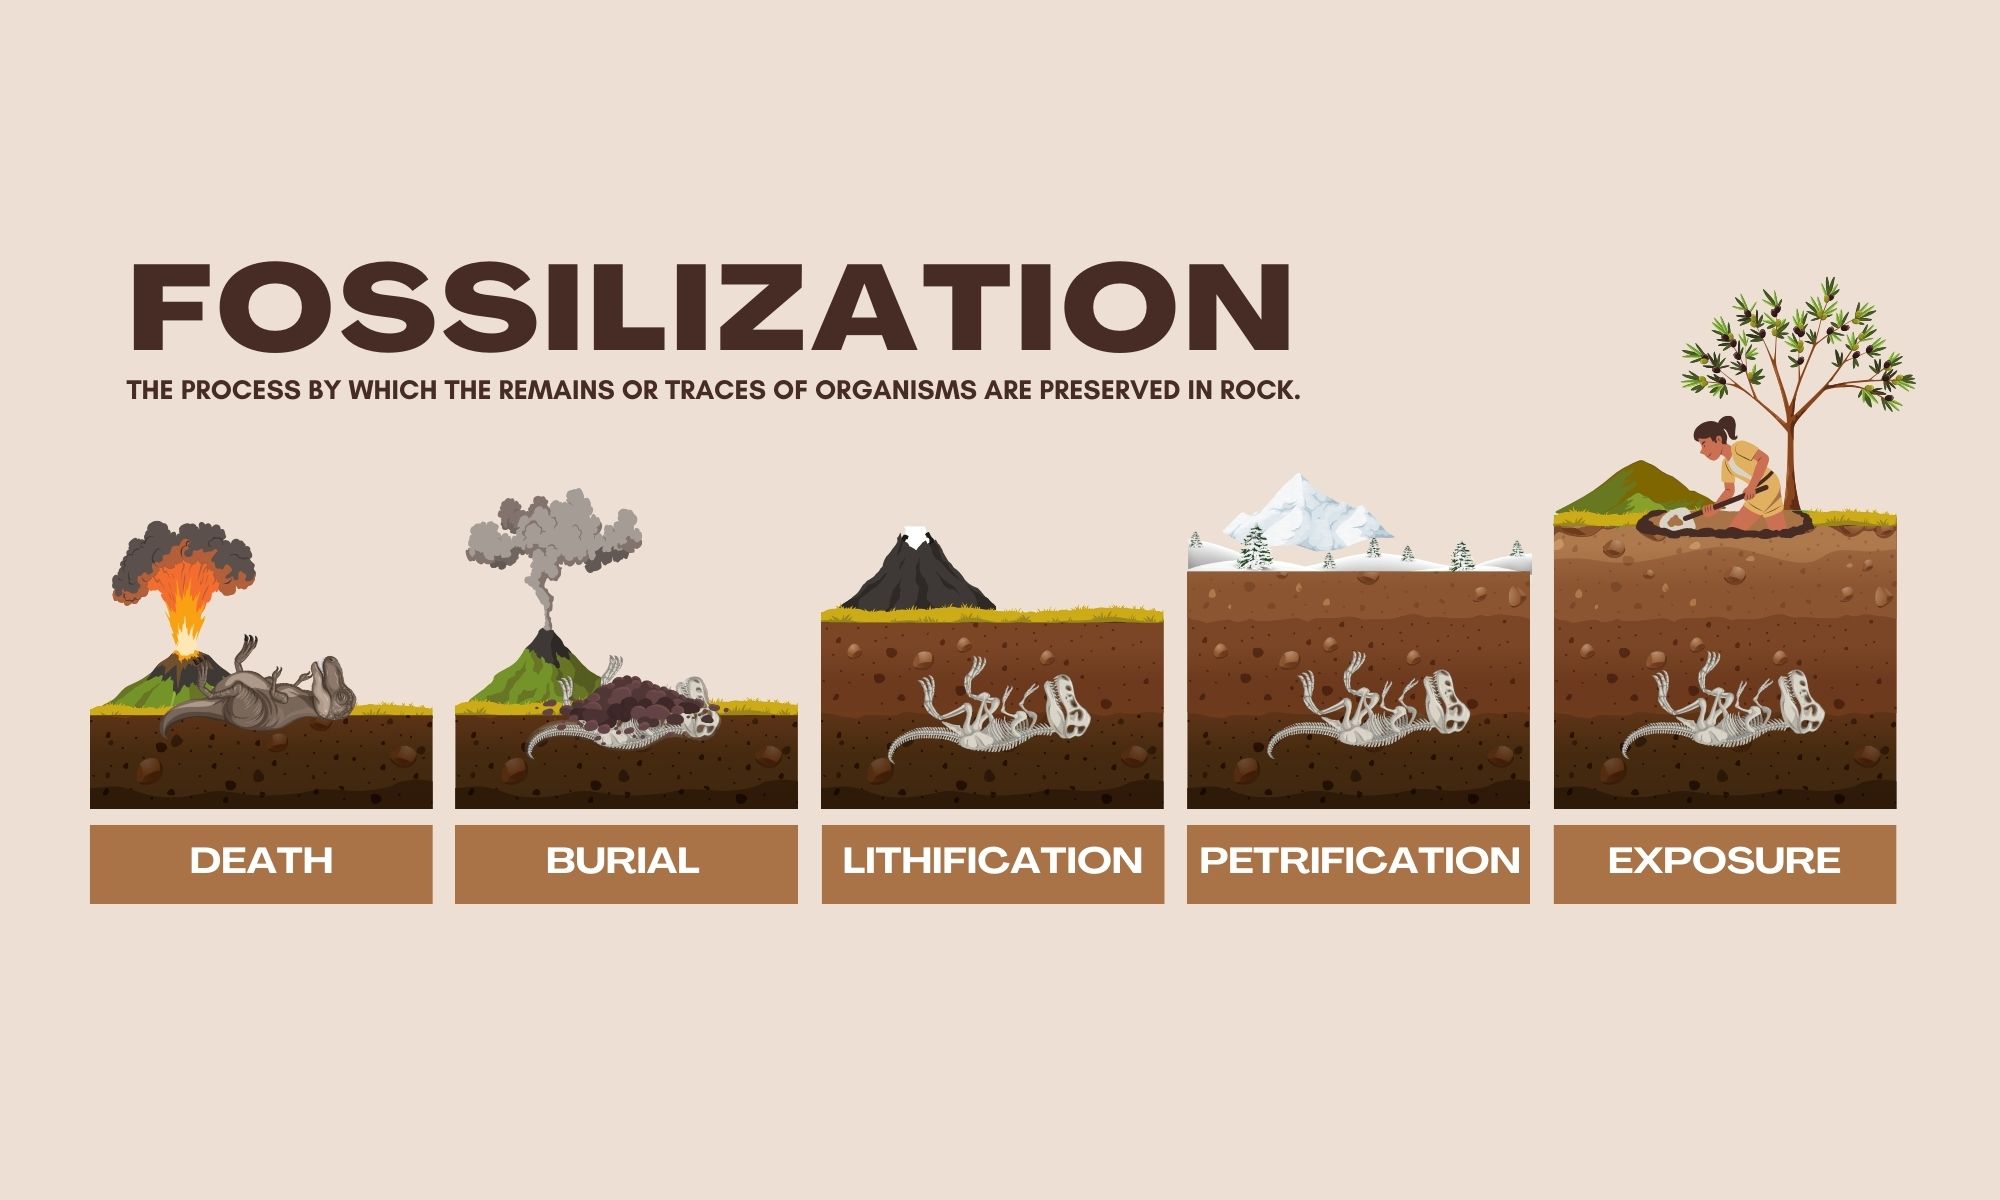 Fossilization